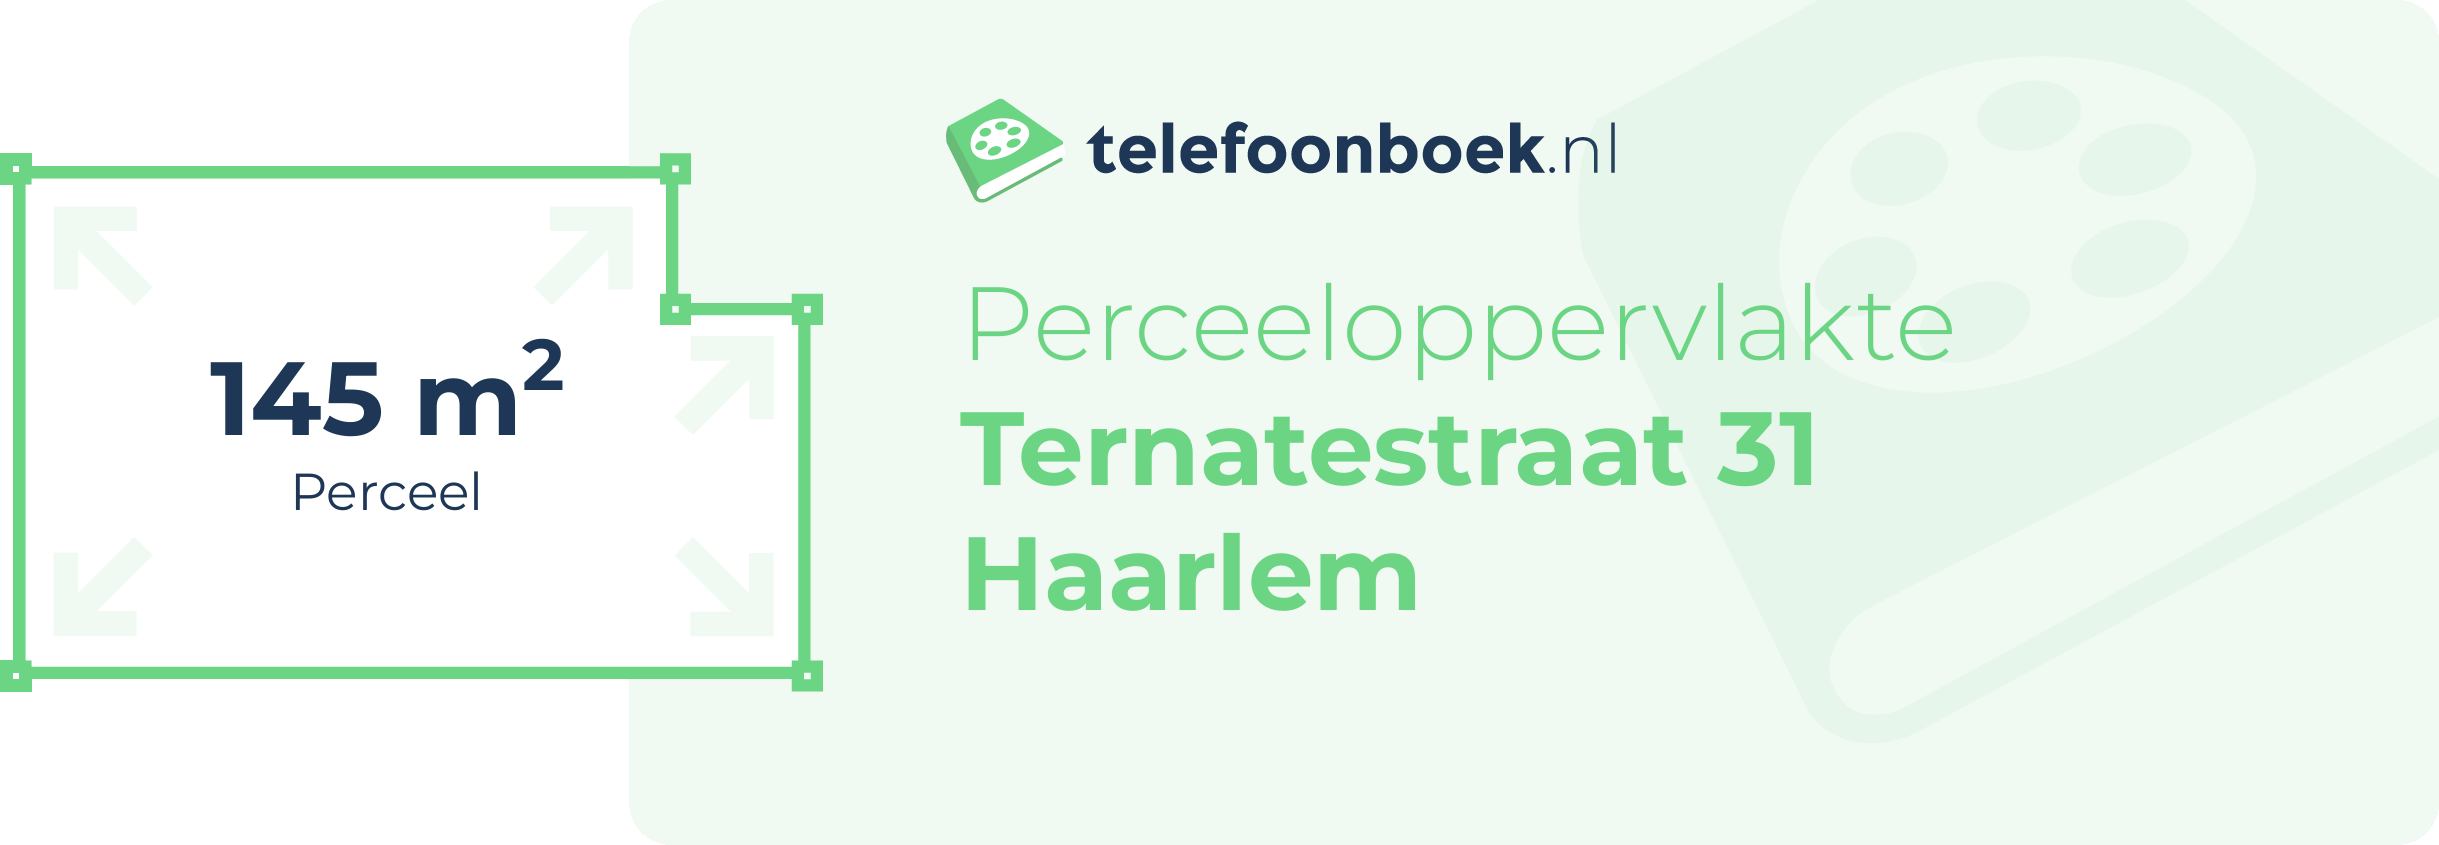 Perceeloppervlakte Ternatestraat 31 Haarlem